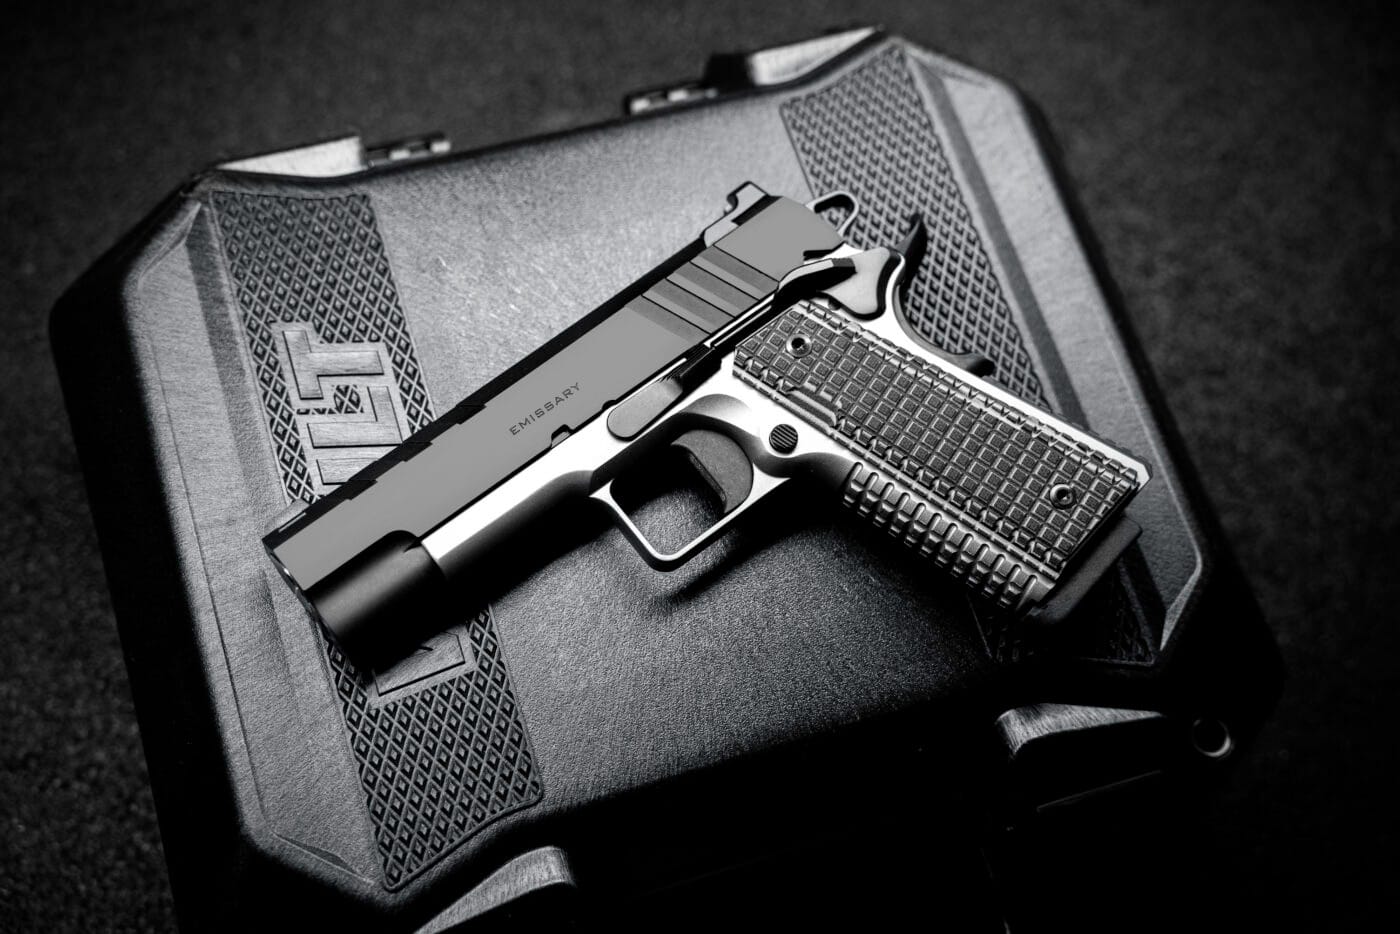 Springfield Emissary 9mm 4.25" pistol sitting on top of case